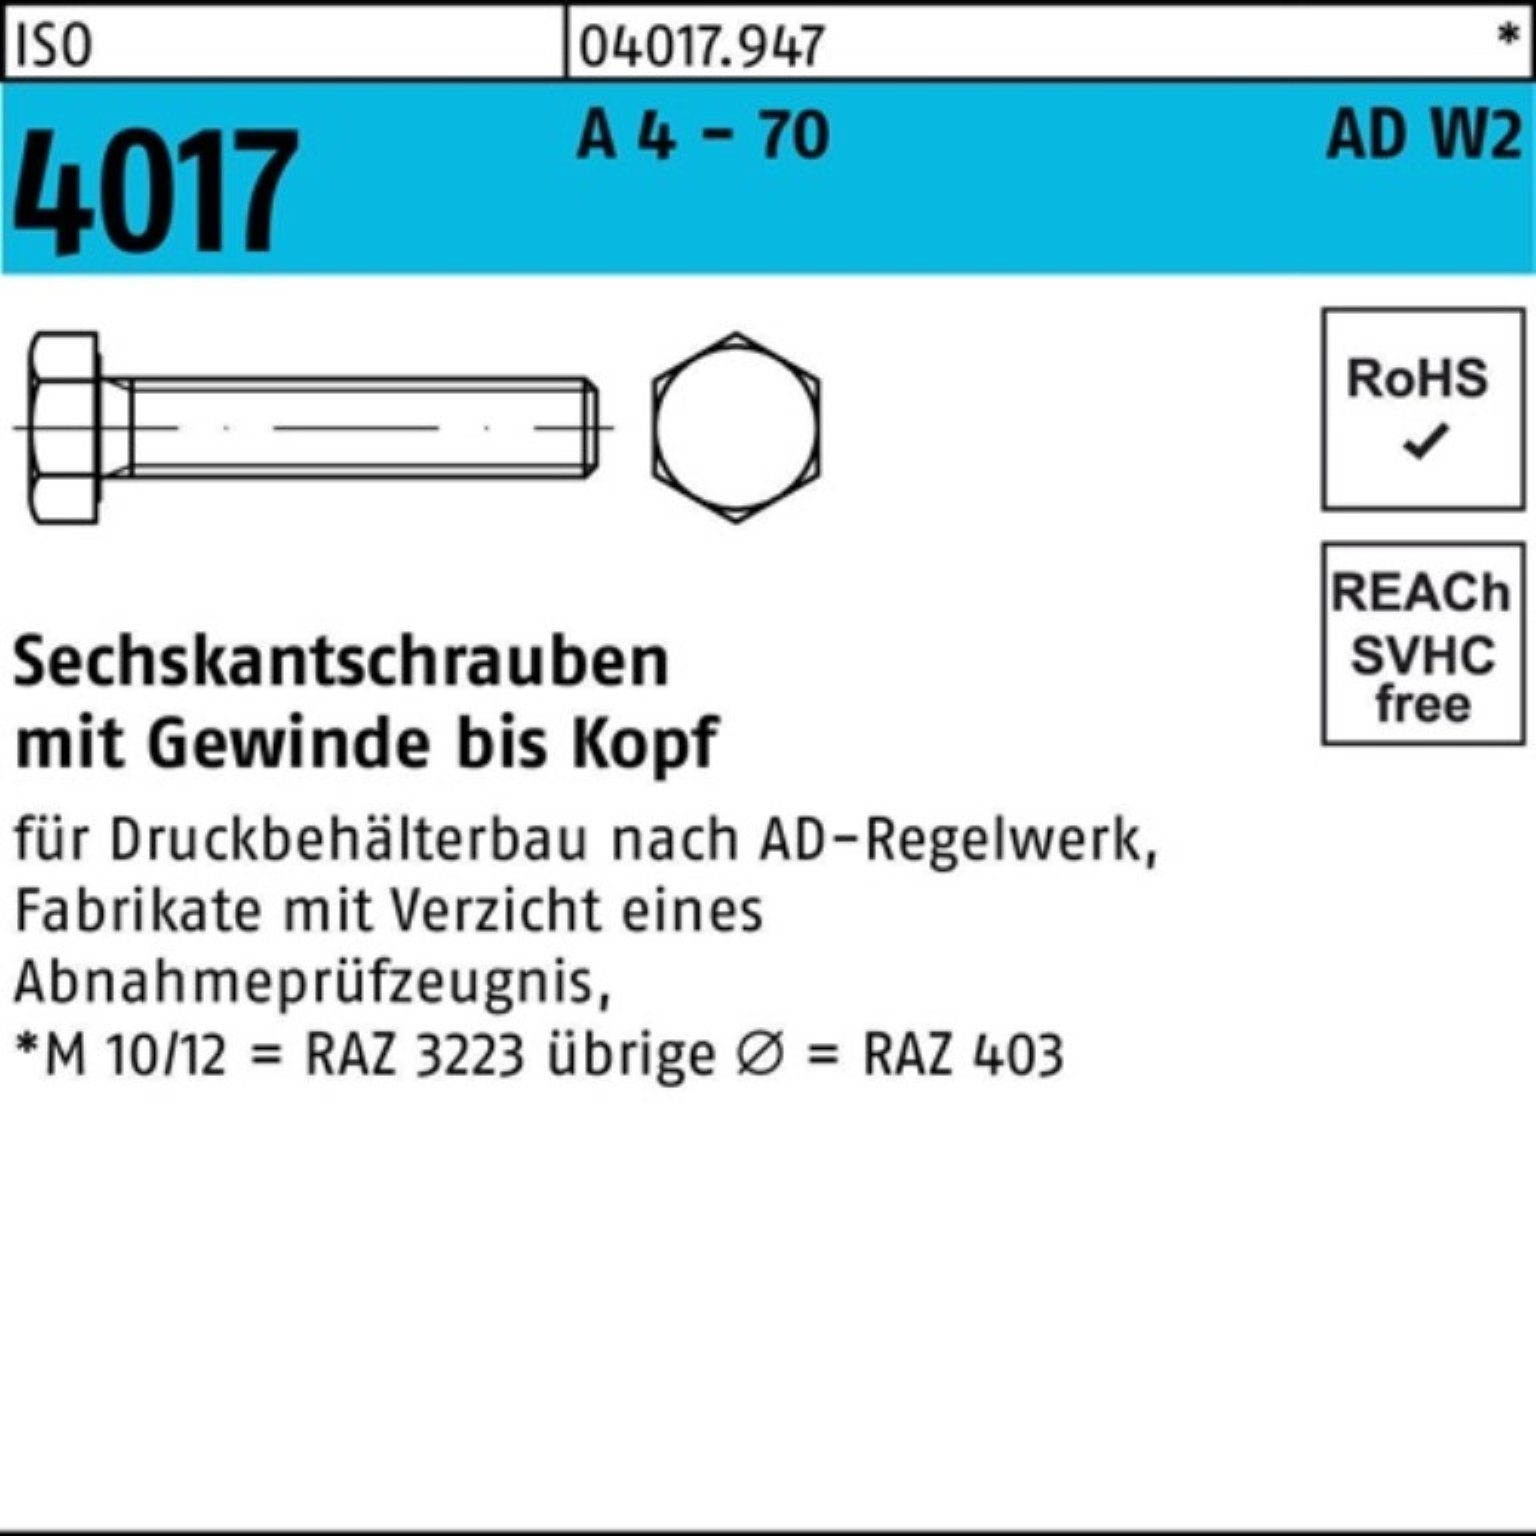 70 VG Bufab St Sechskantschraube 20 A 4017 ISO 200er Pack AD-W2 M6x 4 - Sechskantschraube 200